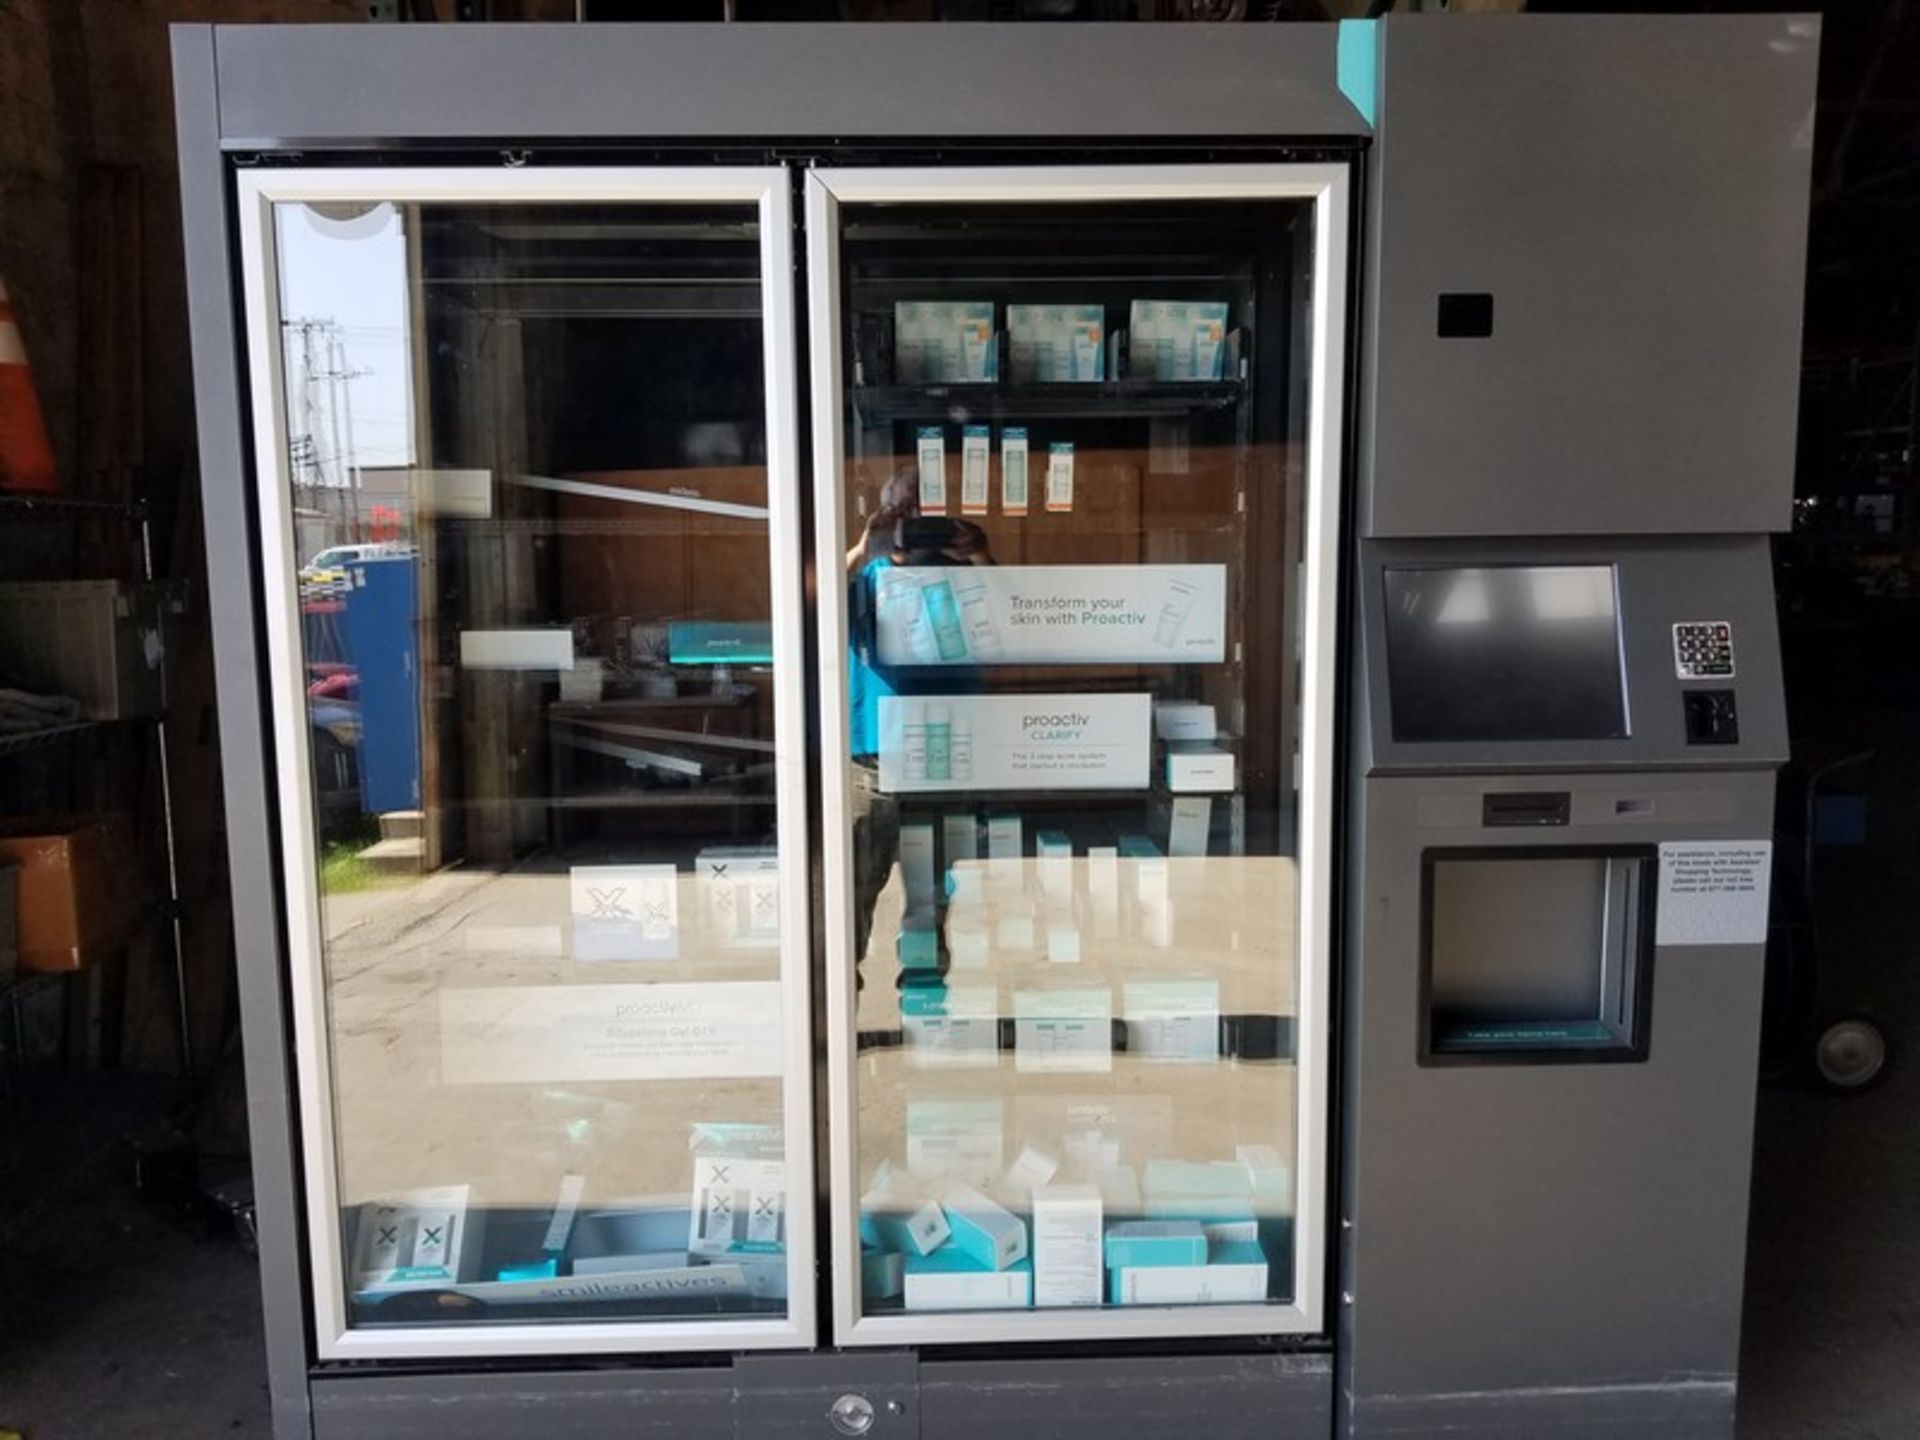 Sanyo E & E RRS7001C vending machine, S/N 130100021, volt 120 (Handling, Loading & Site Management